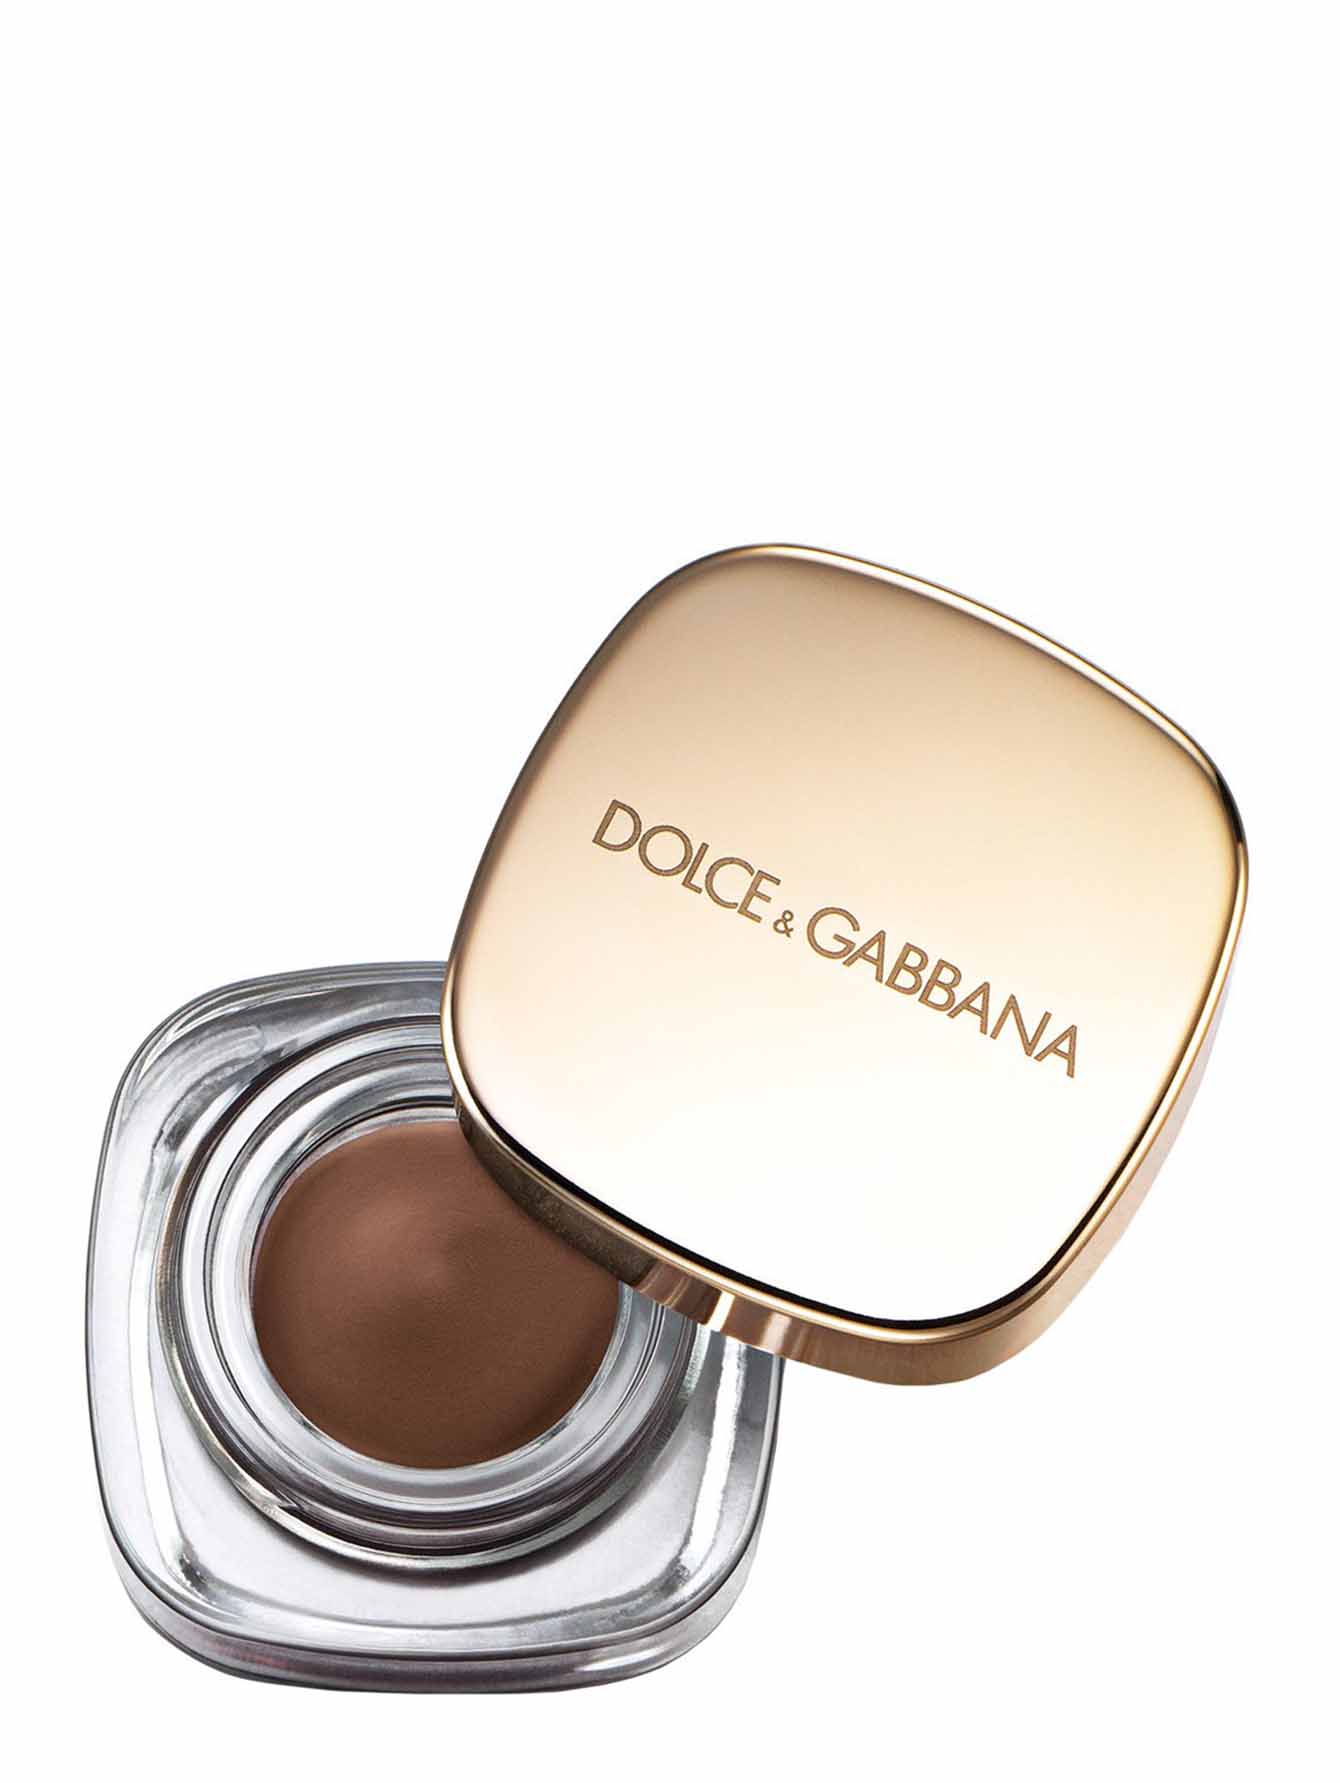 Тени дольче габбана. Dolce&Gabbana кремовые тени для век perfect mono. Тени Dolce Gabbana. Жидкие тени Дольче Габбана. Perfect mono Eyeshadow, Gold Dust, Dolce & Gabbana Beauty.